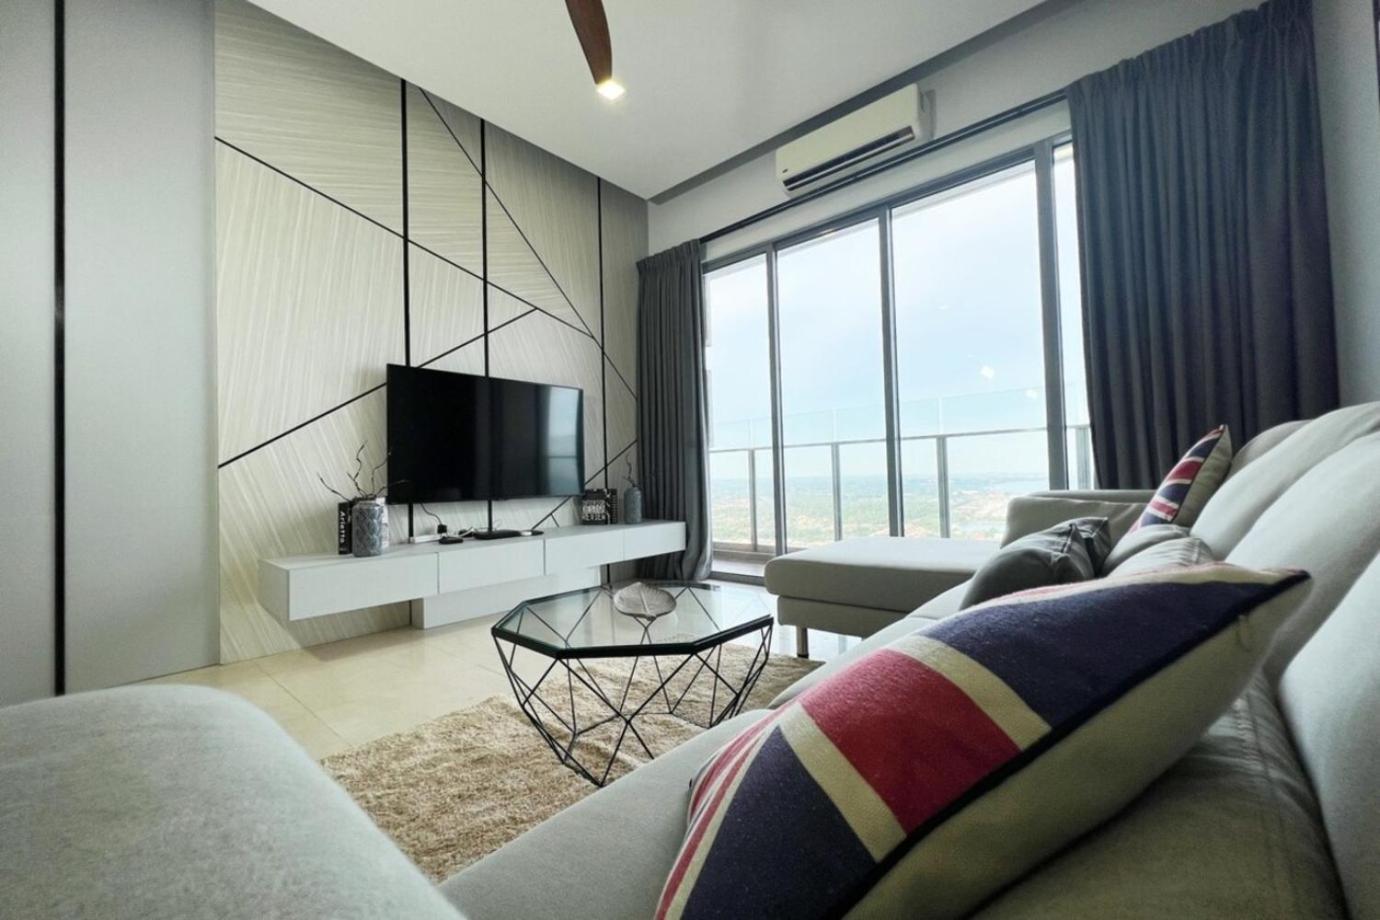 Silverscape Seaview Residence Melaka מראה חיצוני תמונה